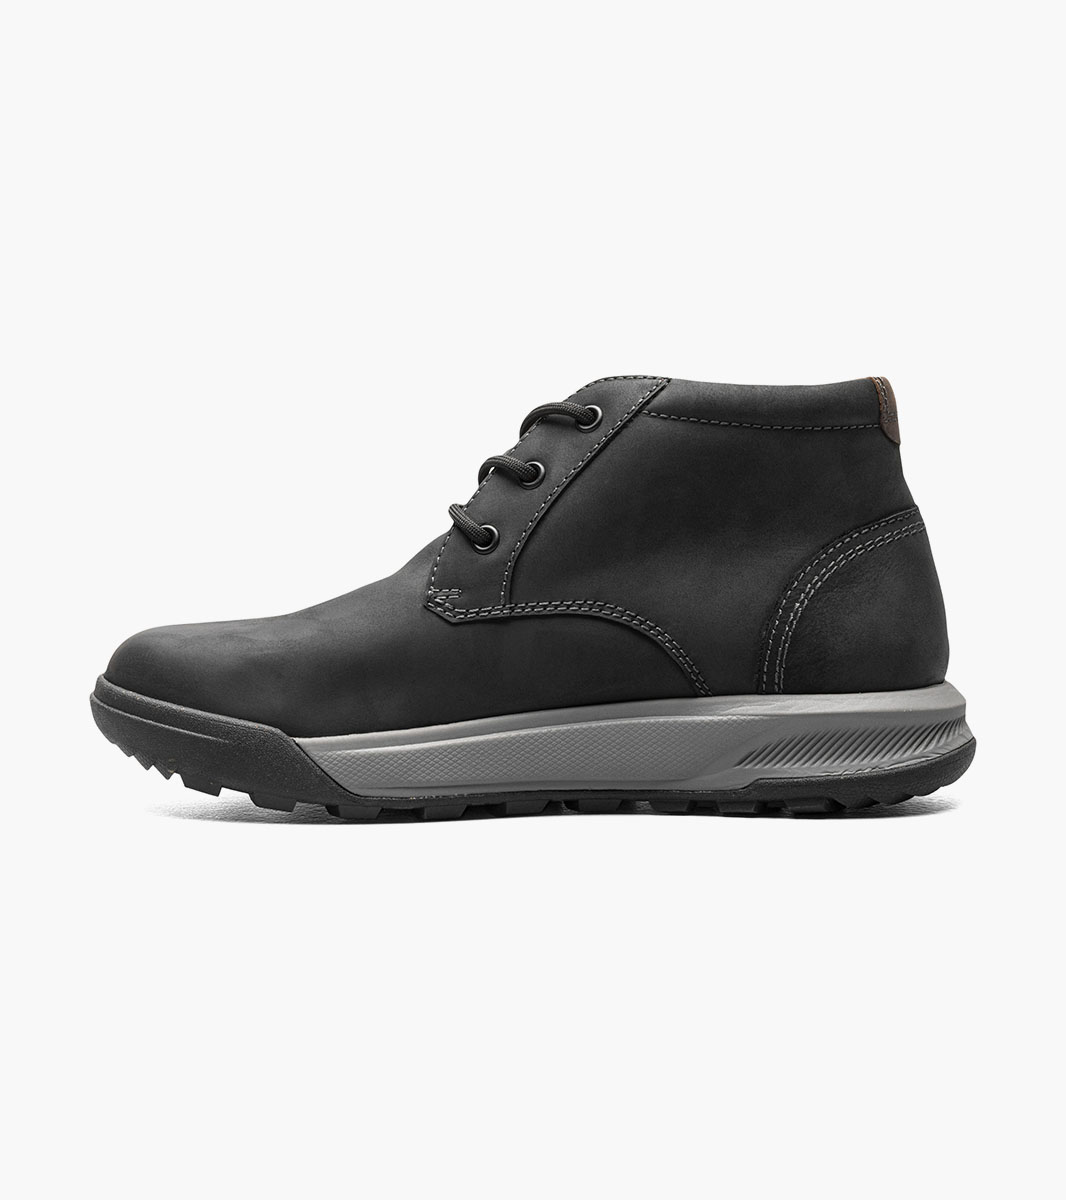 Trail Mix Plain Toe Chukka Boot Men’s Casual Shoes | Florsheim.com